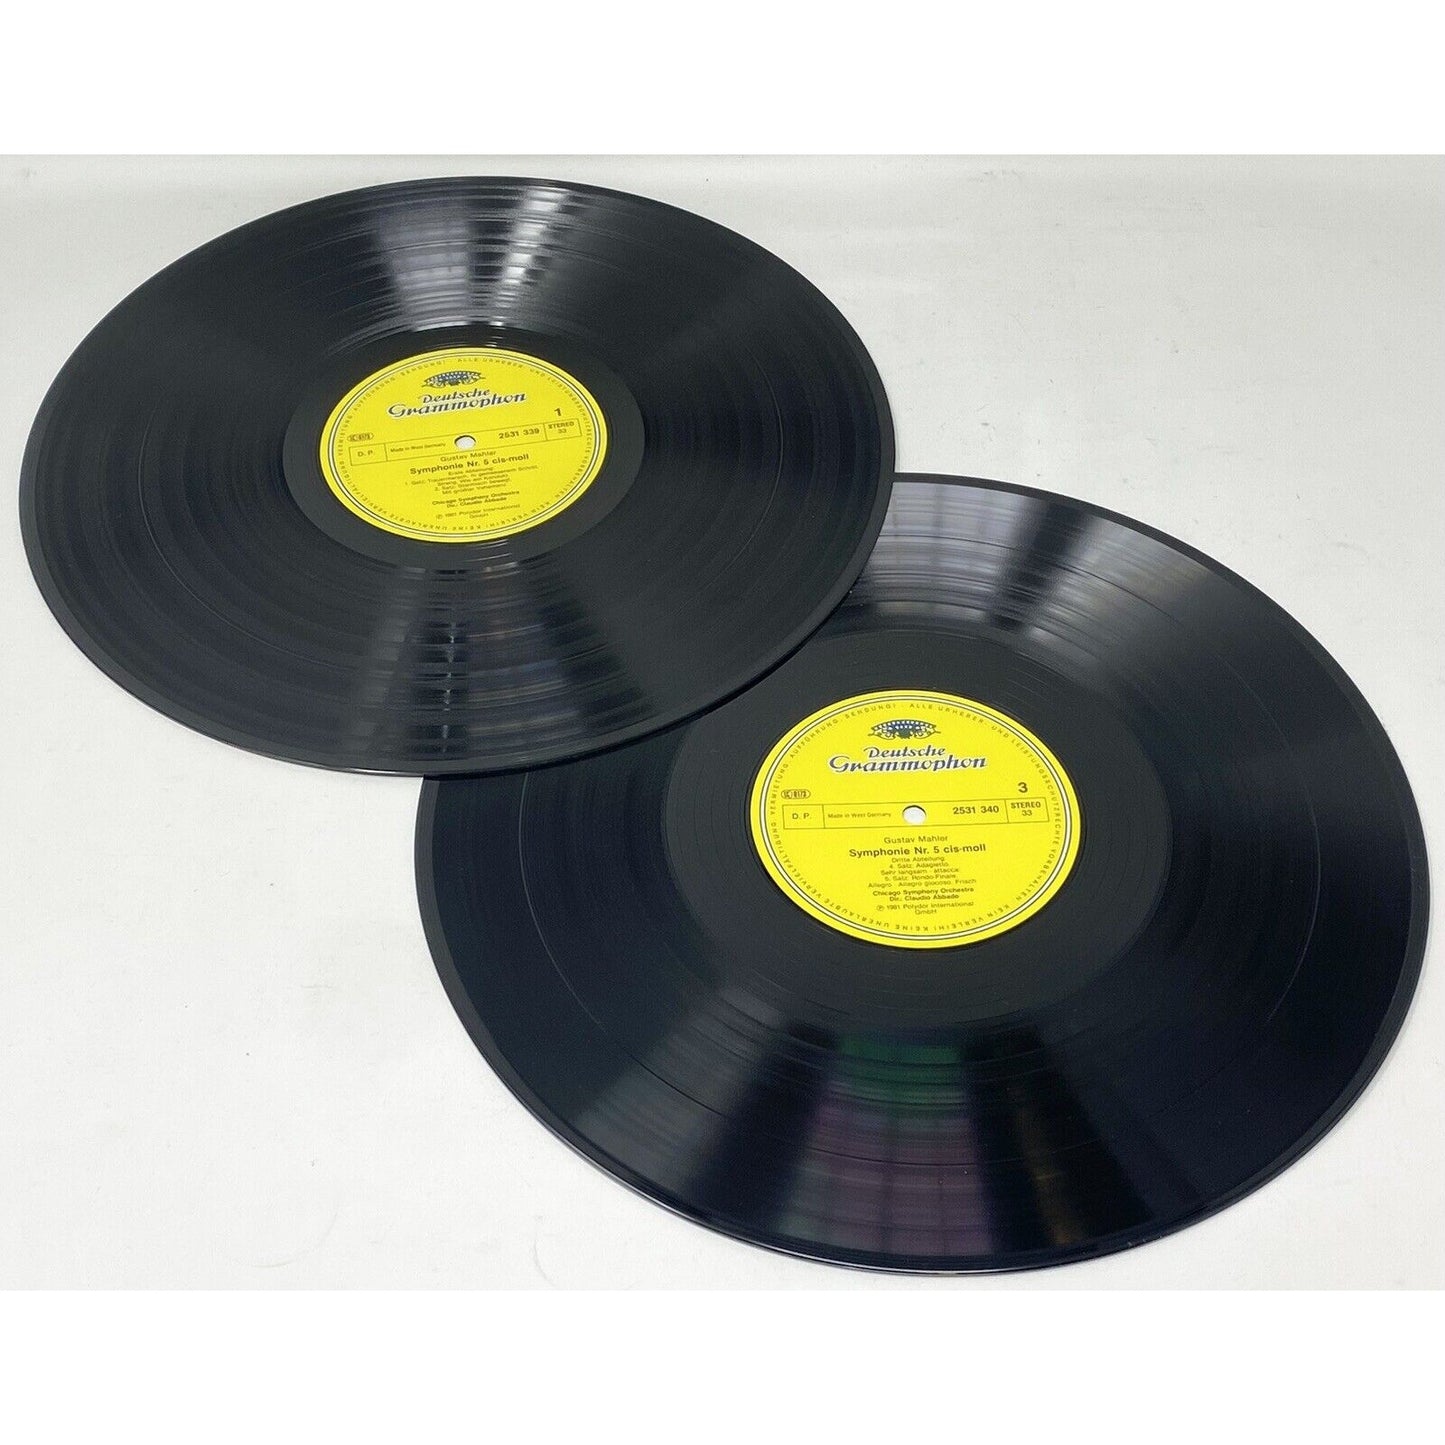 Gustav Mahler Chicago Symphony No. 5 / Rückert-Lieder Vinyl 12" x2 LP